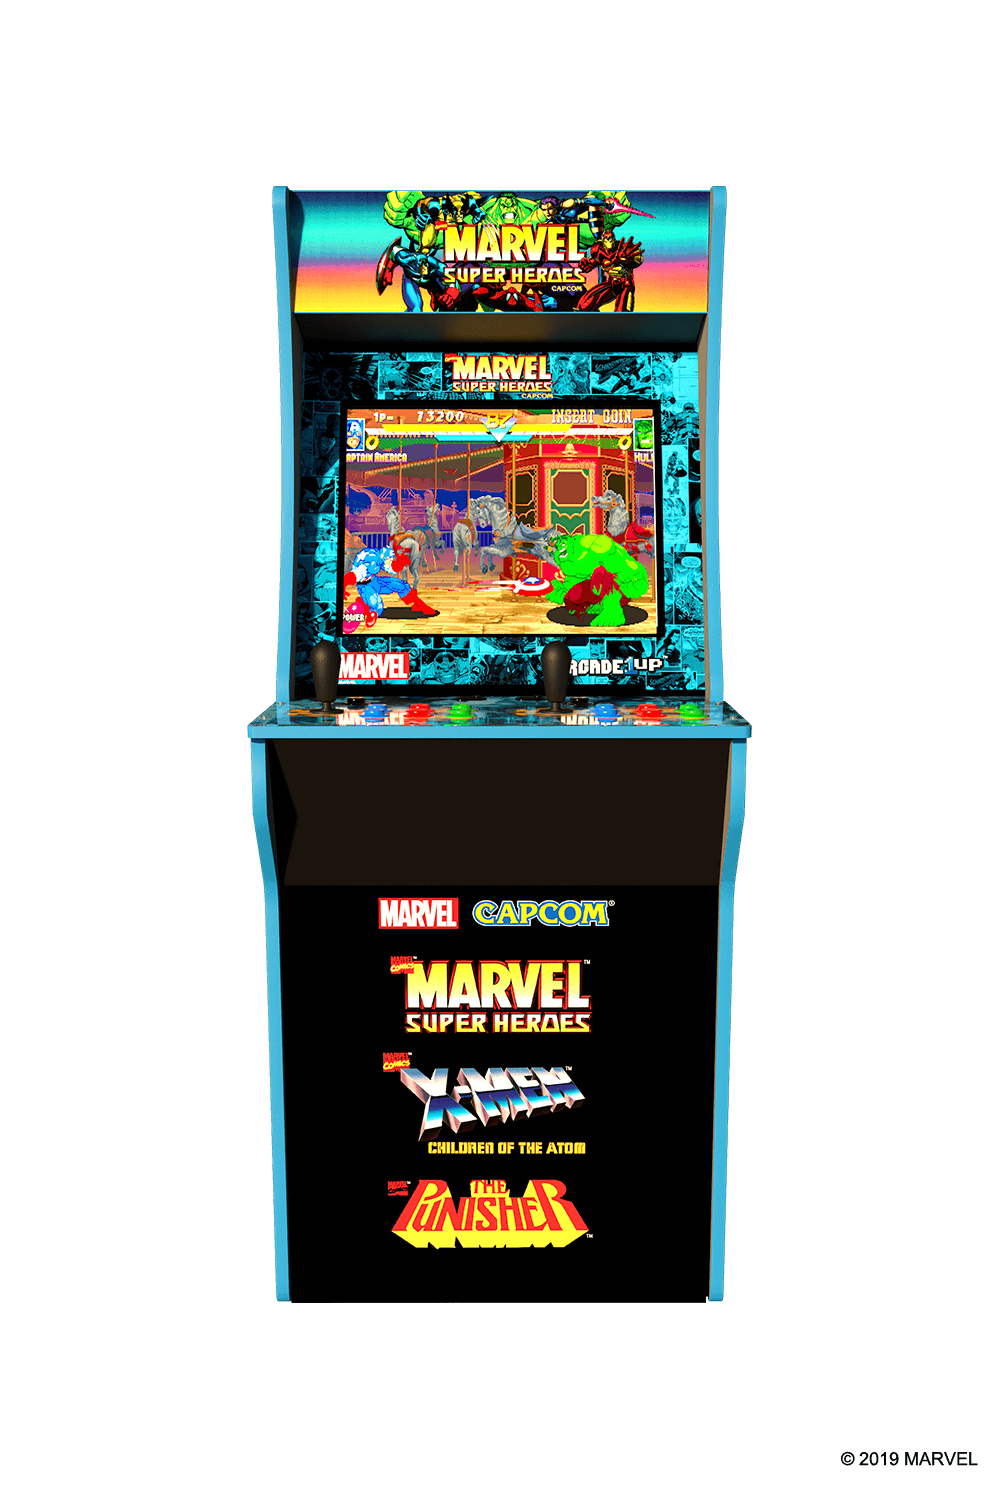 Marvel Super Heroes Arcade Cabinet Arcade1up